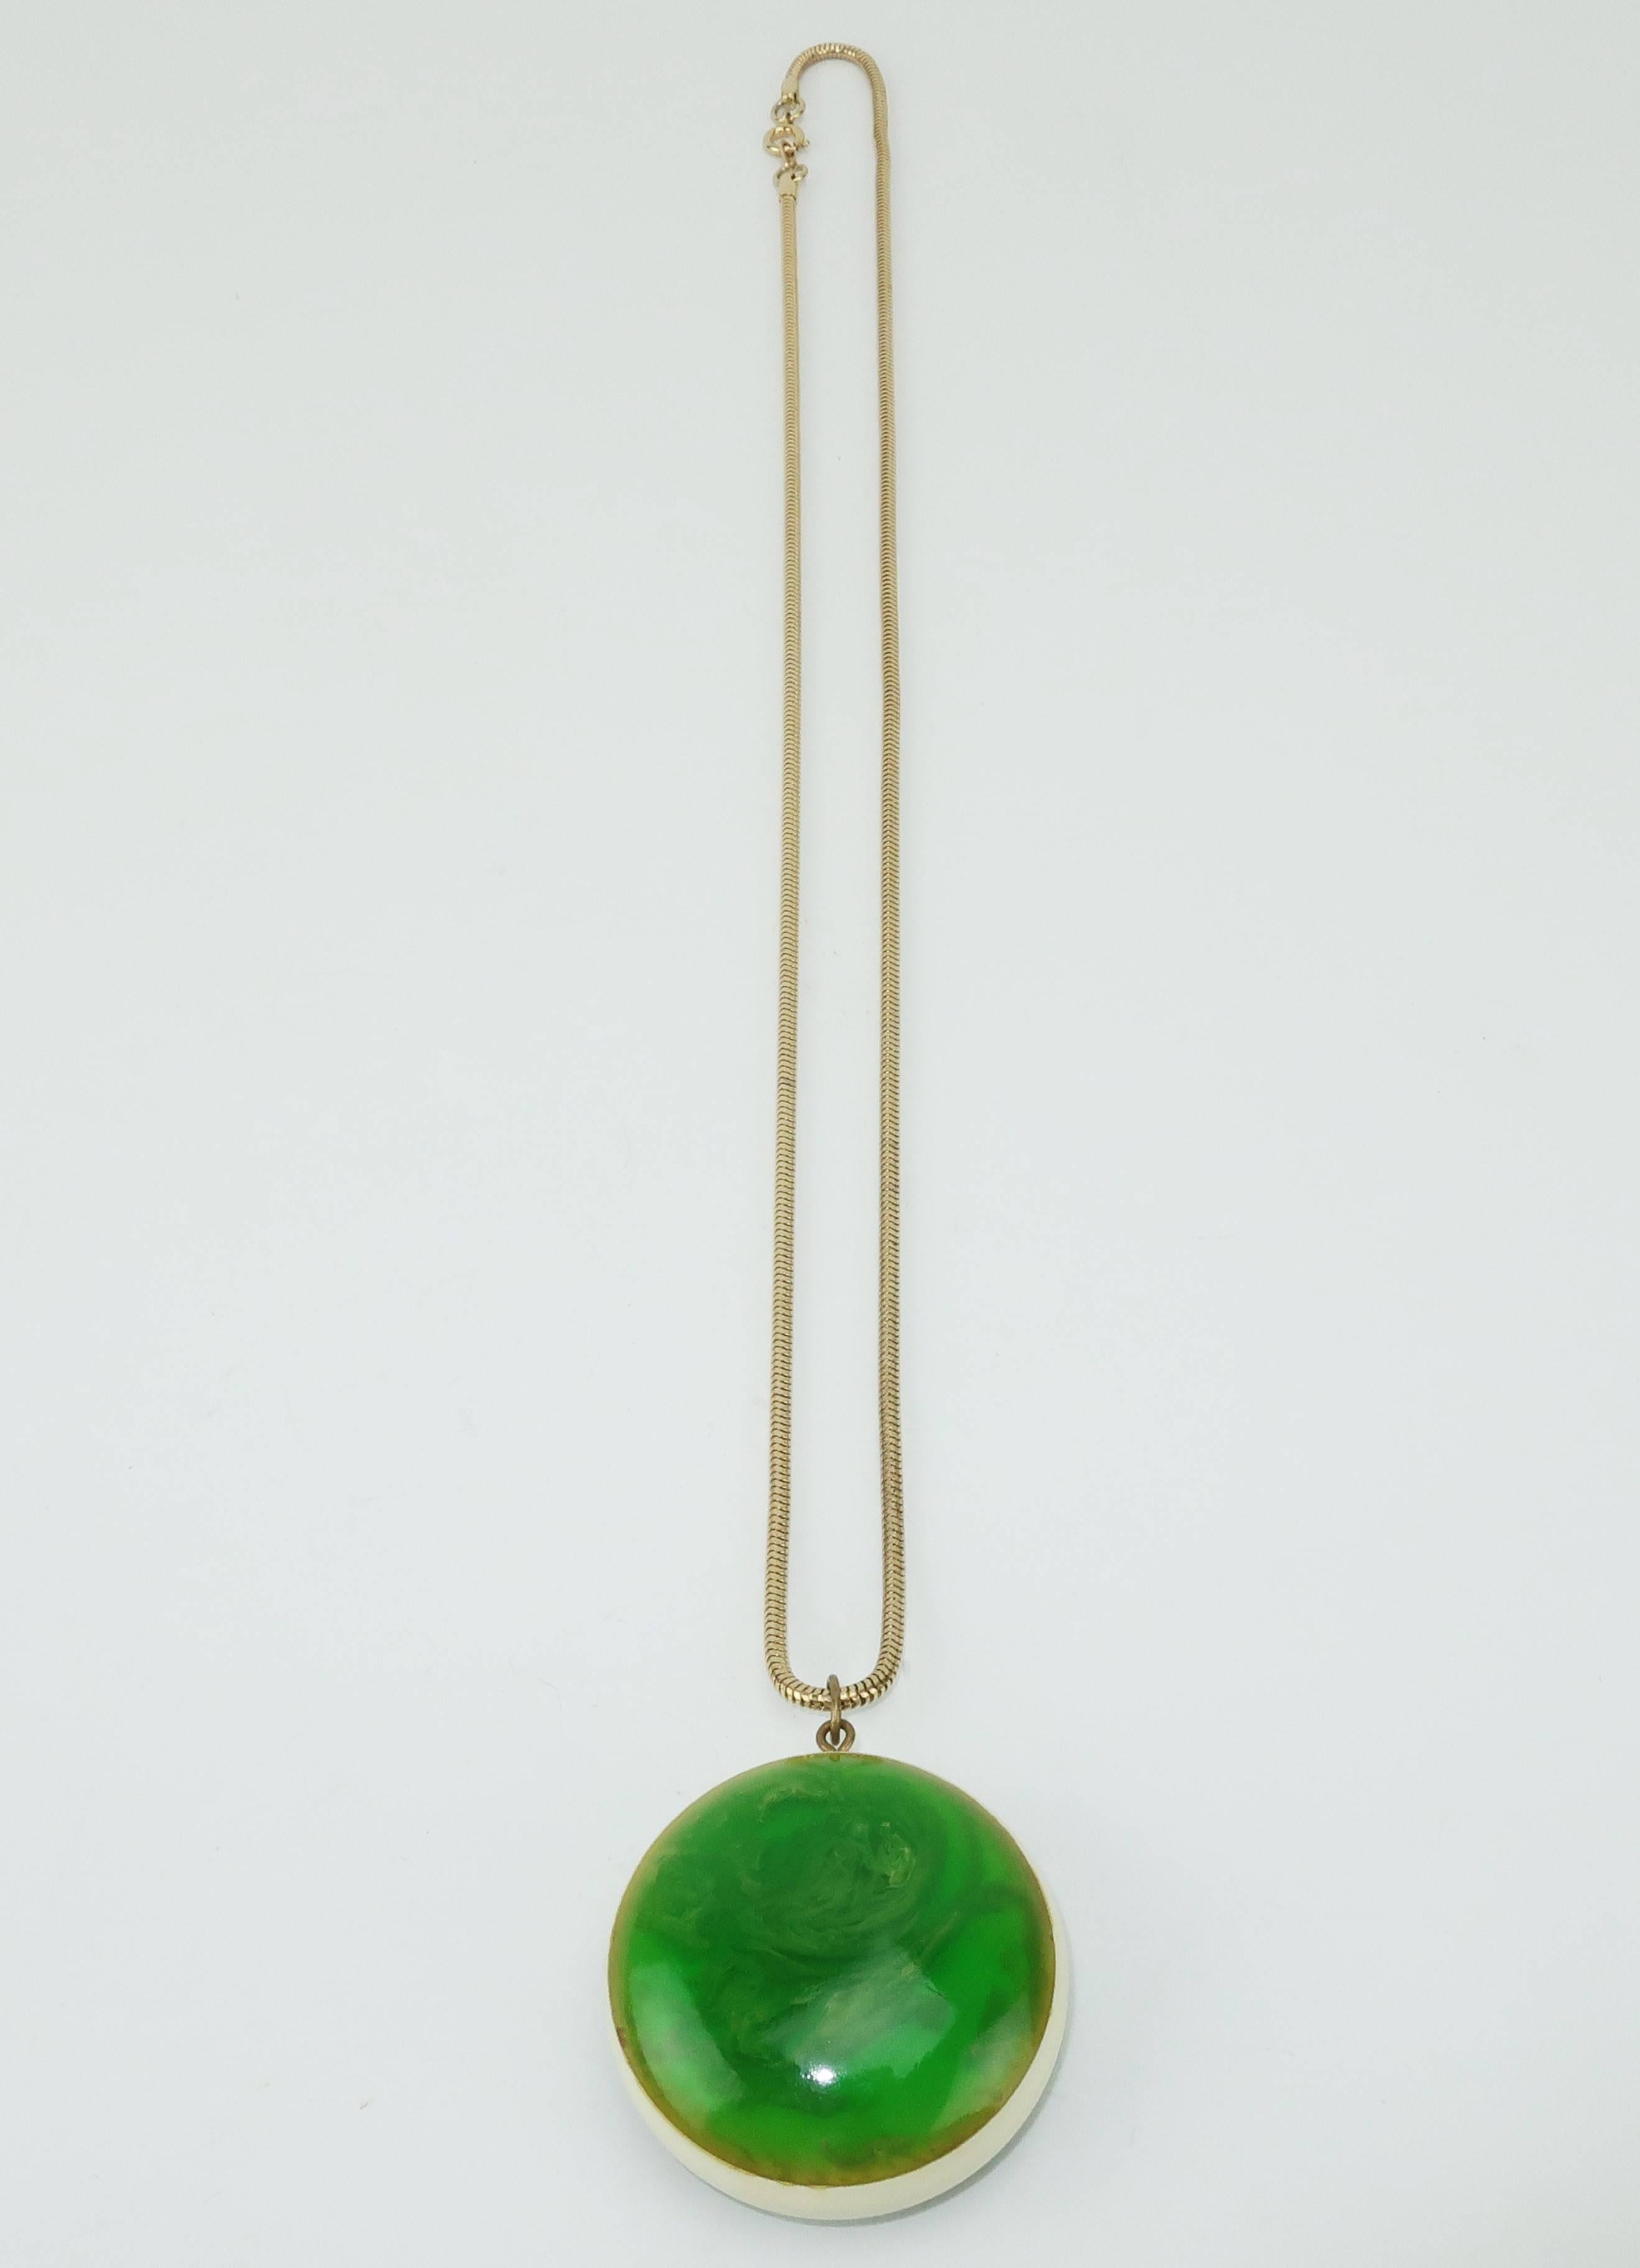 Women's Mod Green Marbled Acrylic Pendant Necklace, circa 1970 